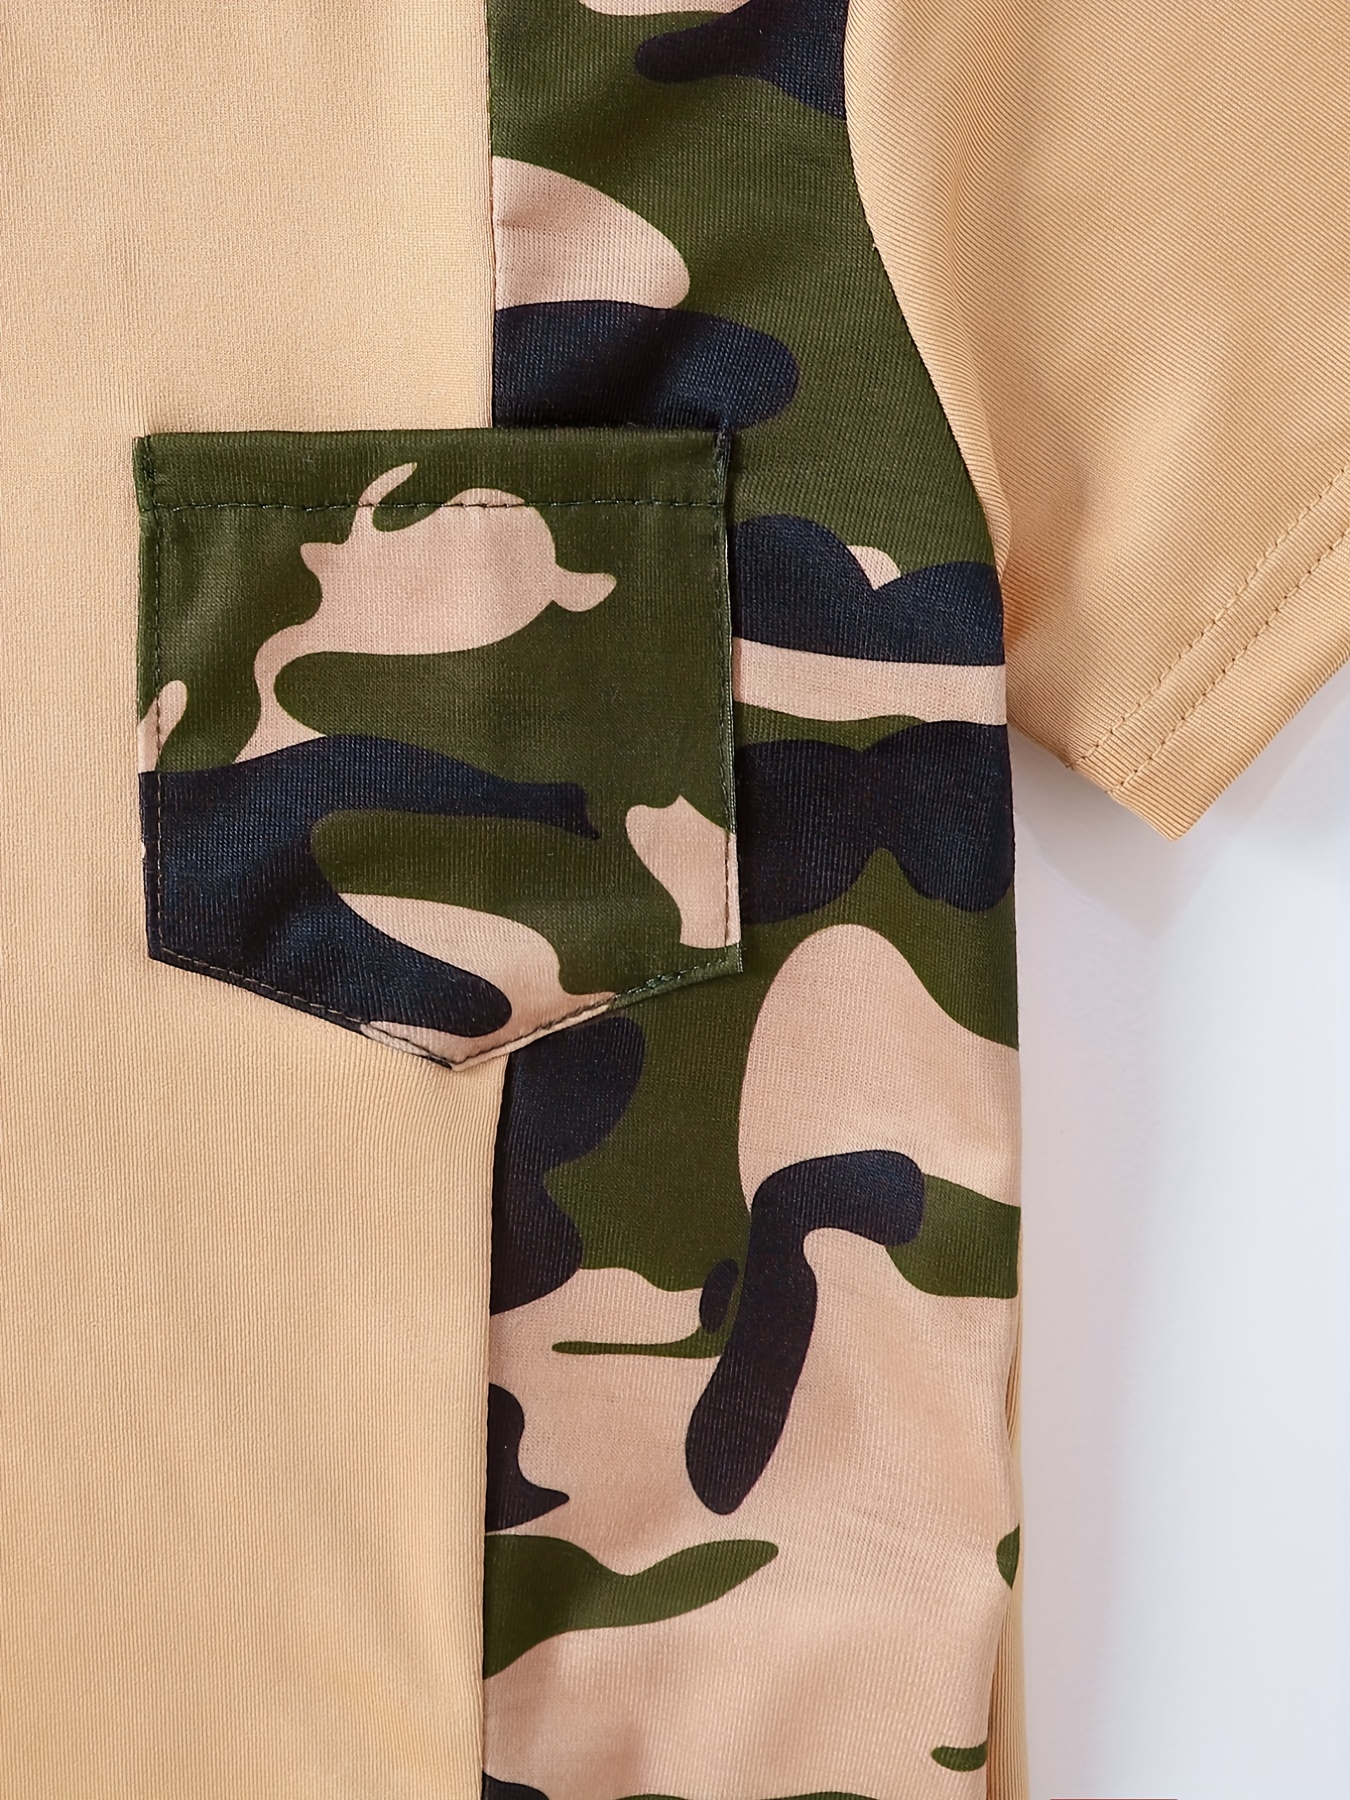 Little Boy Camo Shorts Set Short Sleeve Alpha Print T-Shirt + Camouflage  Shorts Summer Casual Outfits 